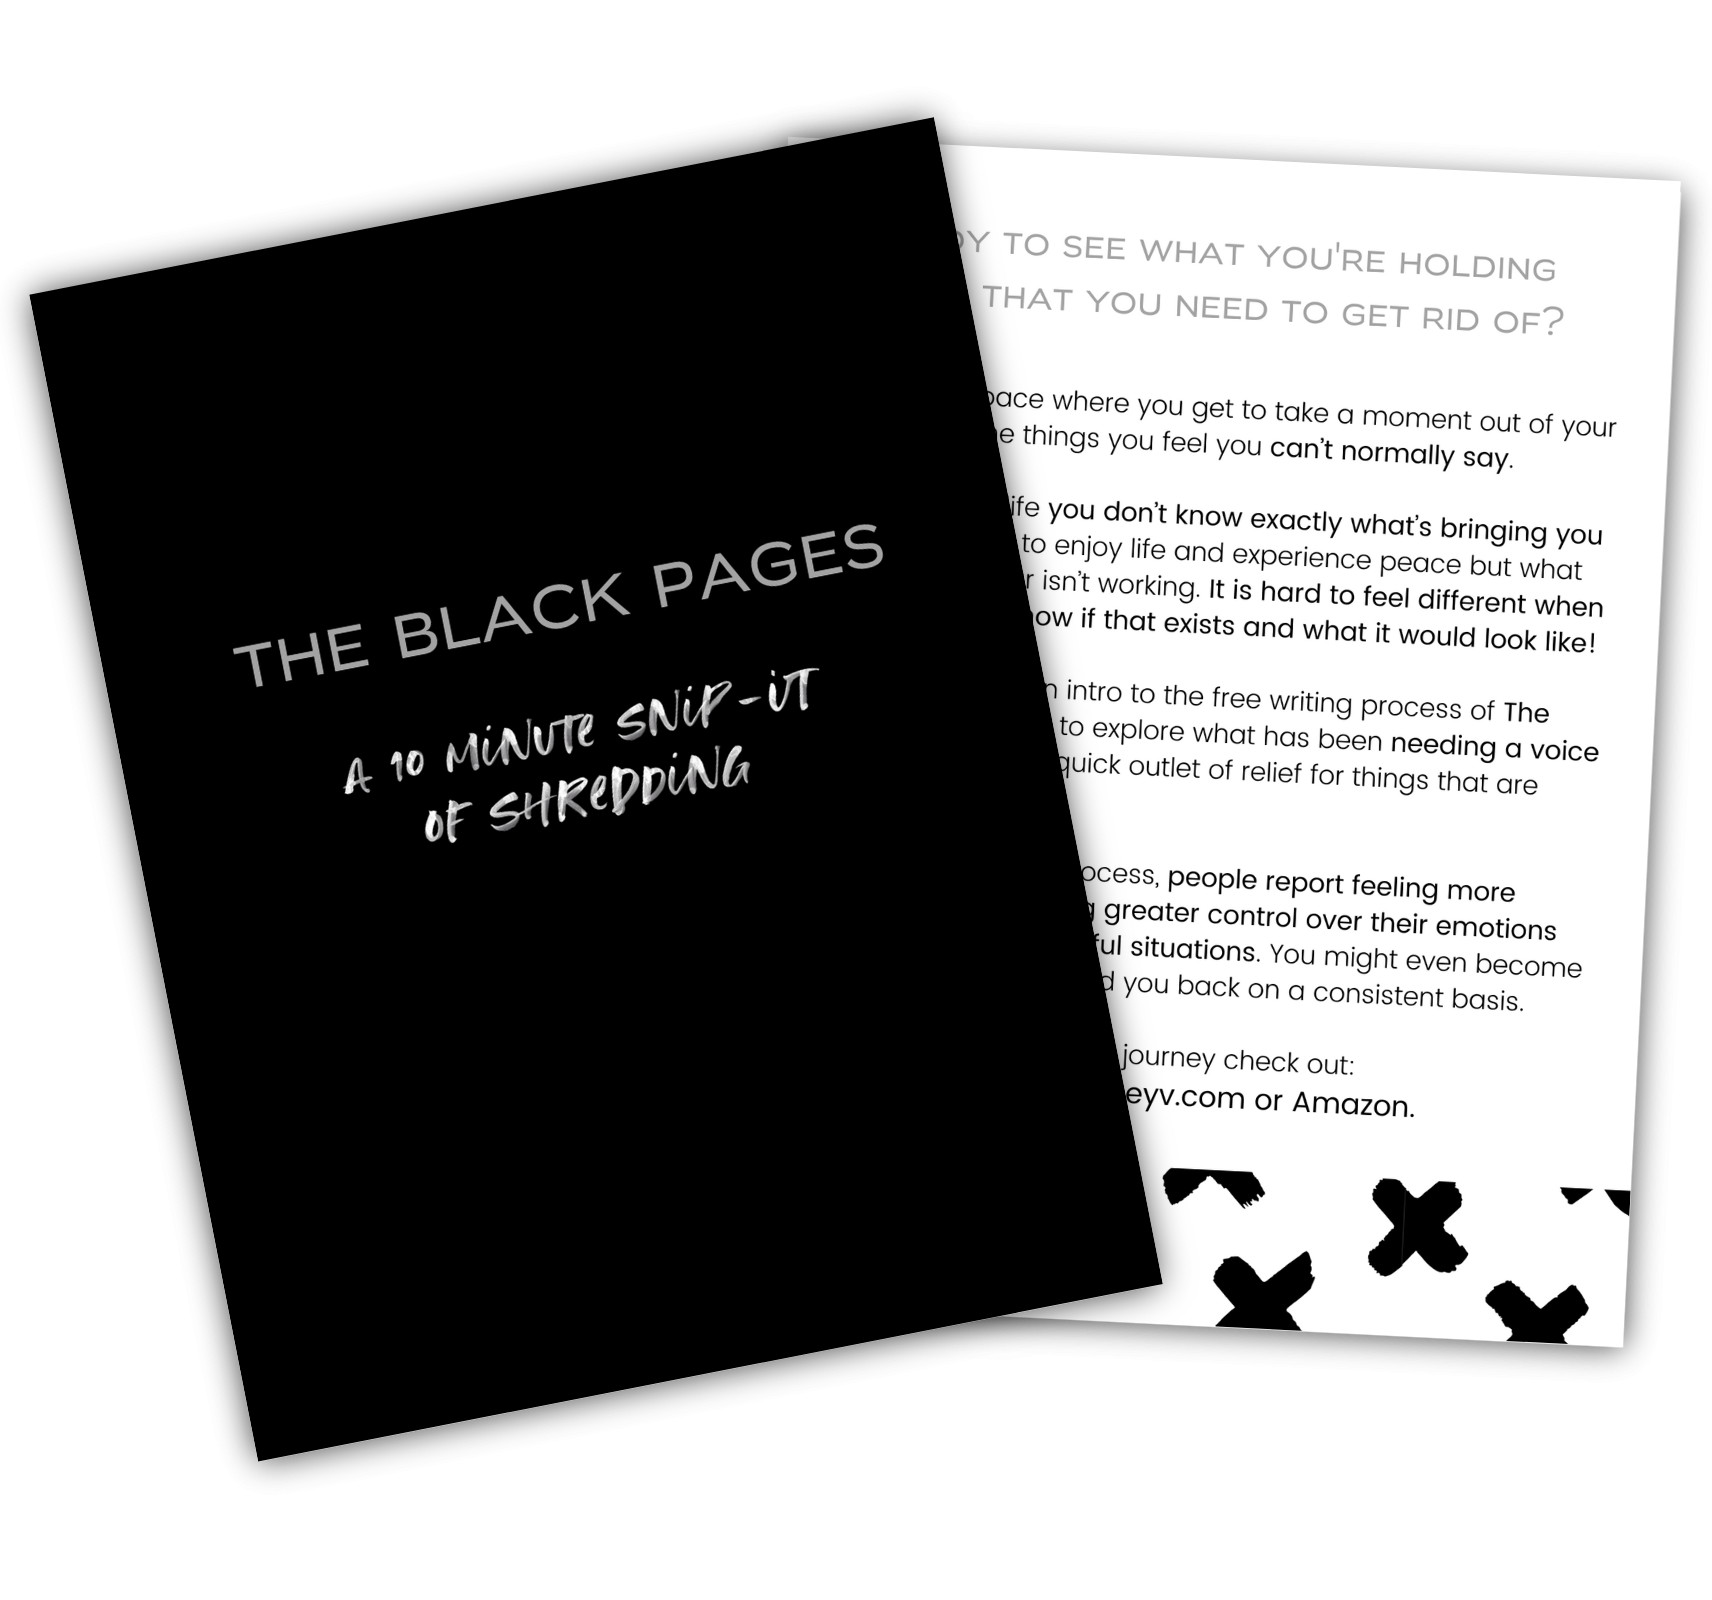 the black book